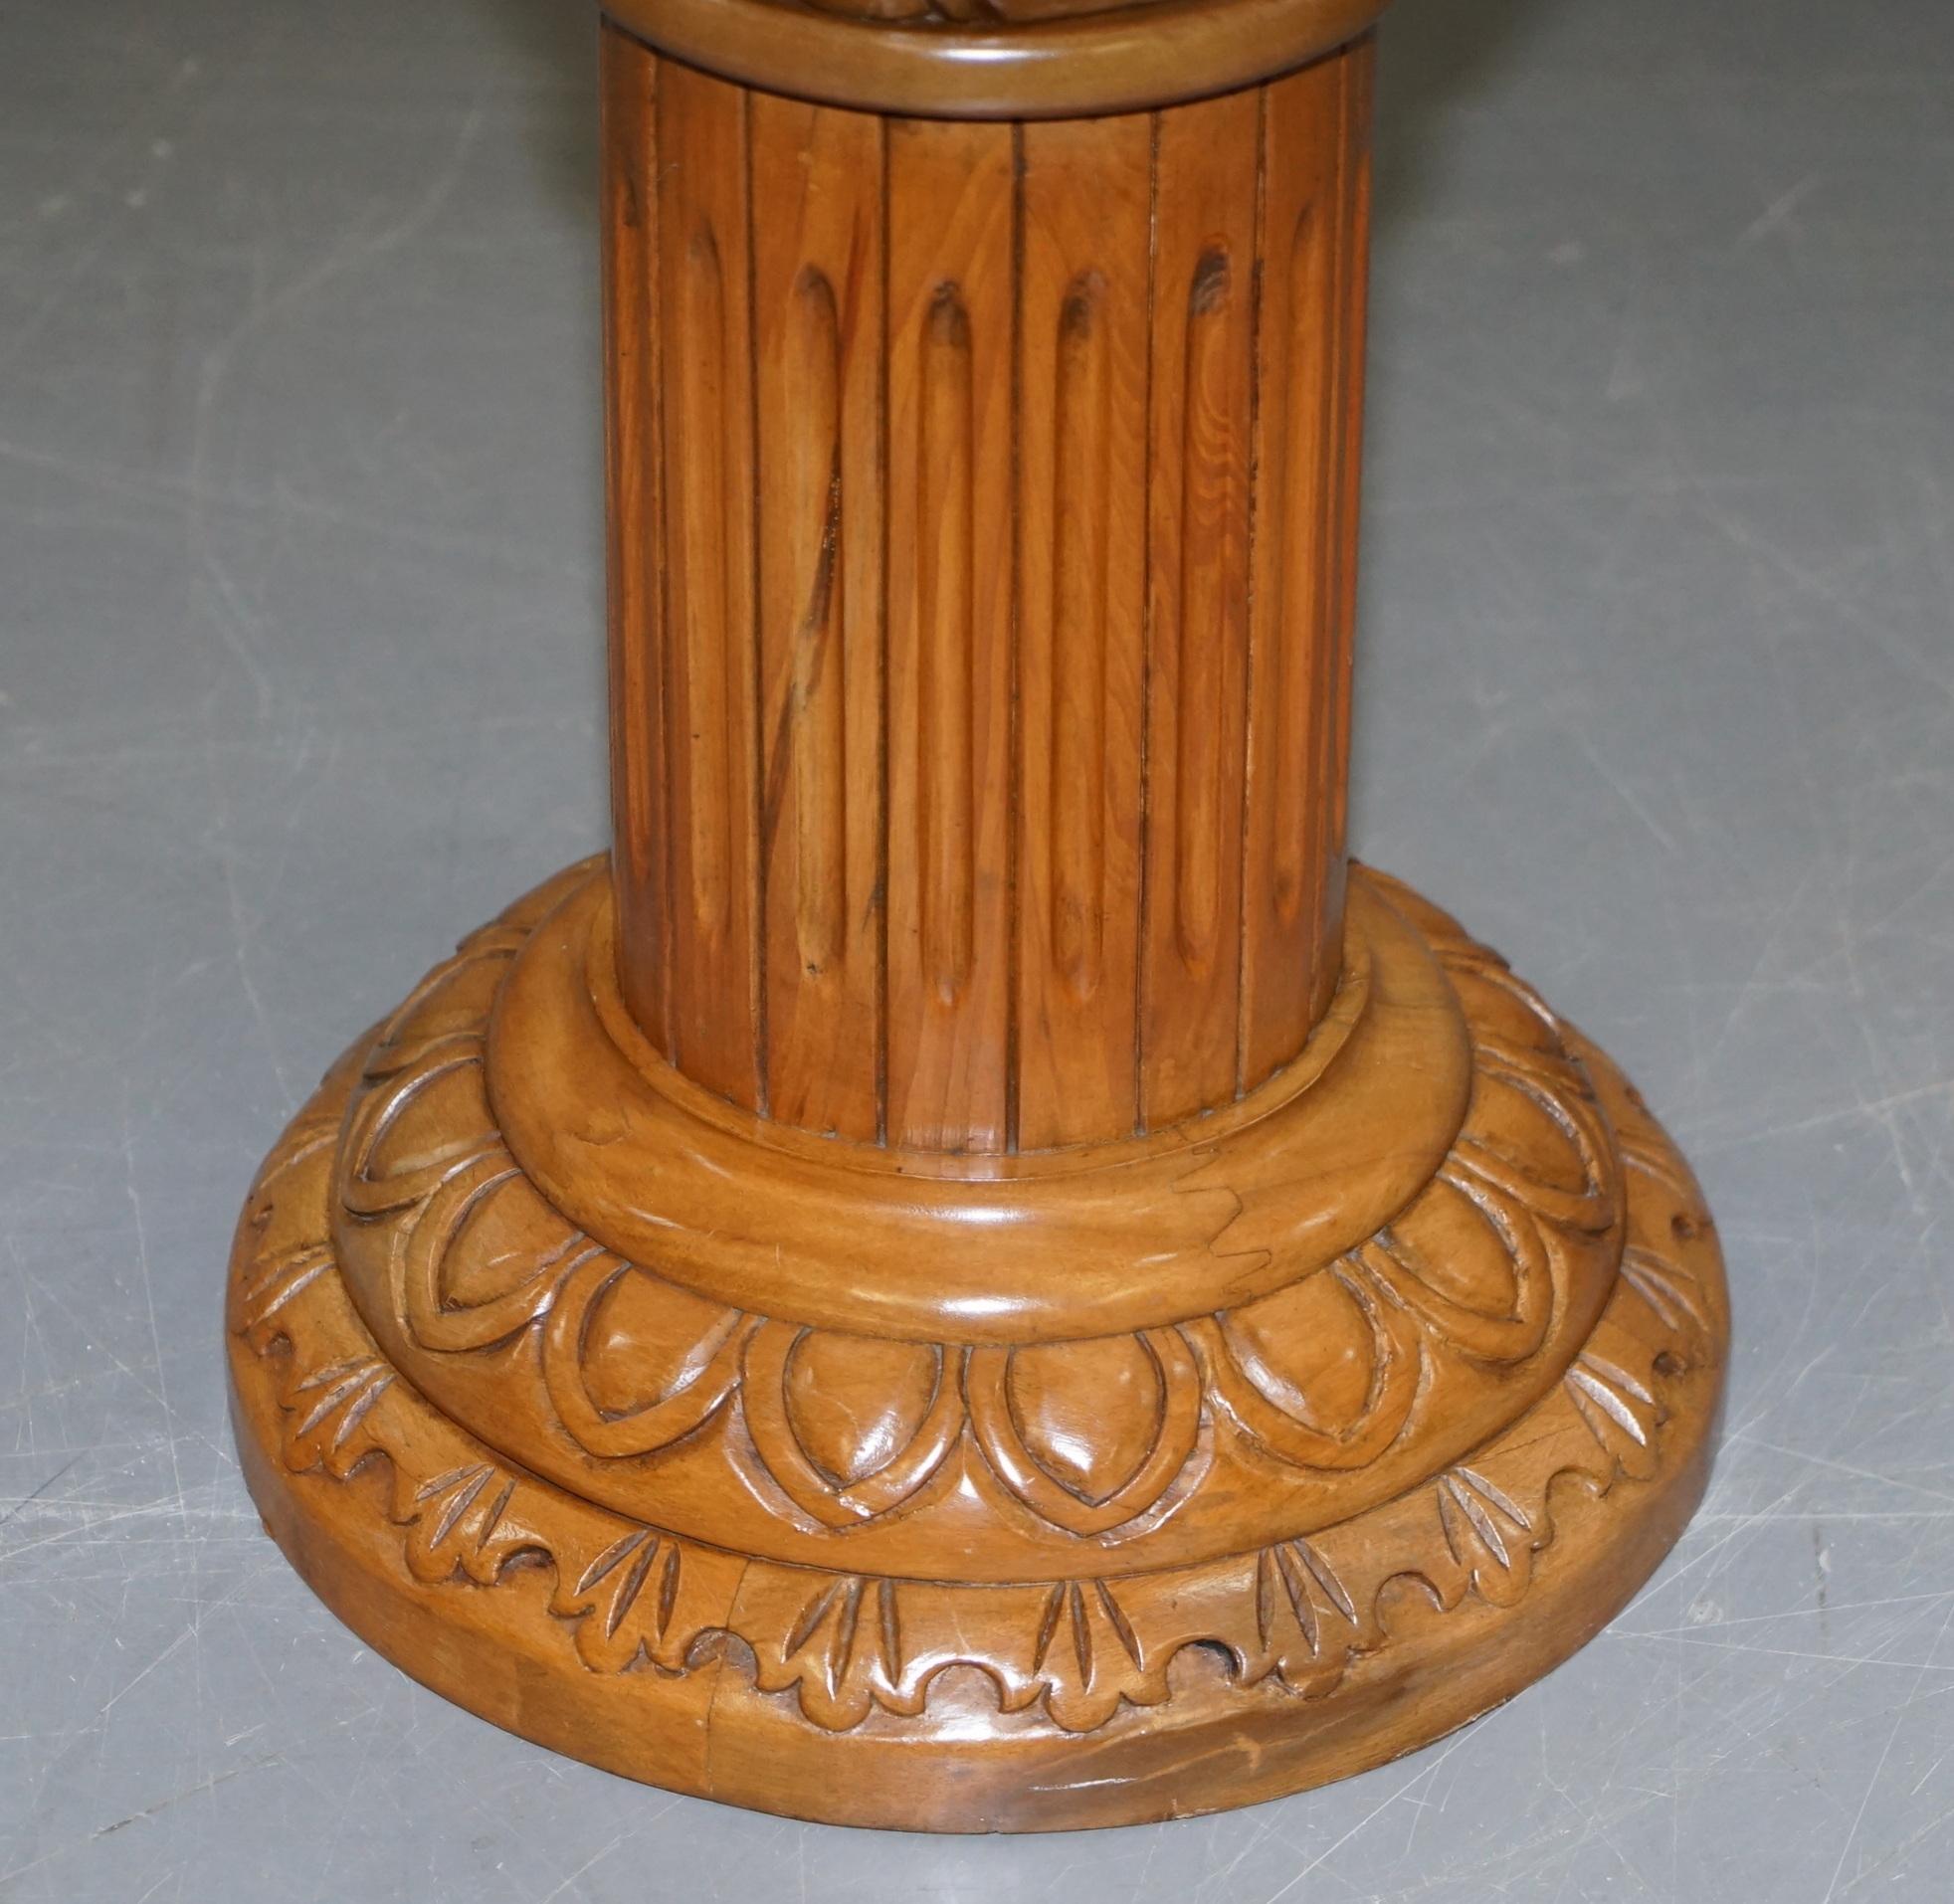 English Side Table Sized Corithian Pillar Jardiniere in Hardwood with Italian Marble Top